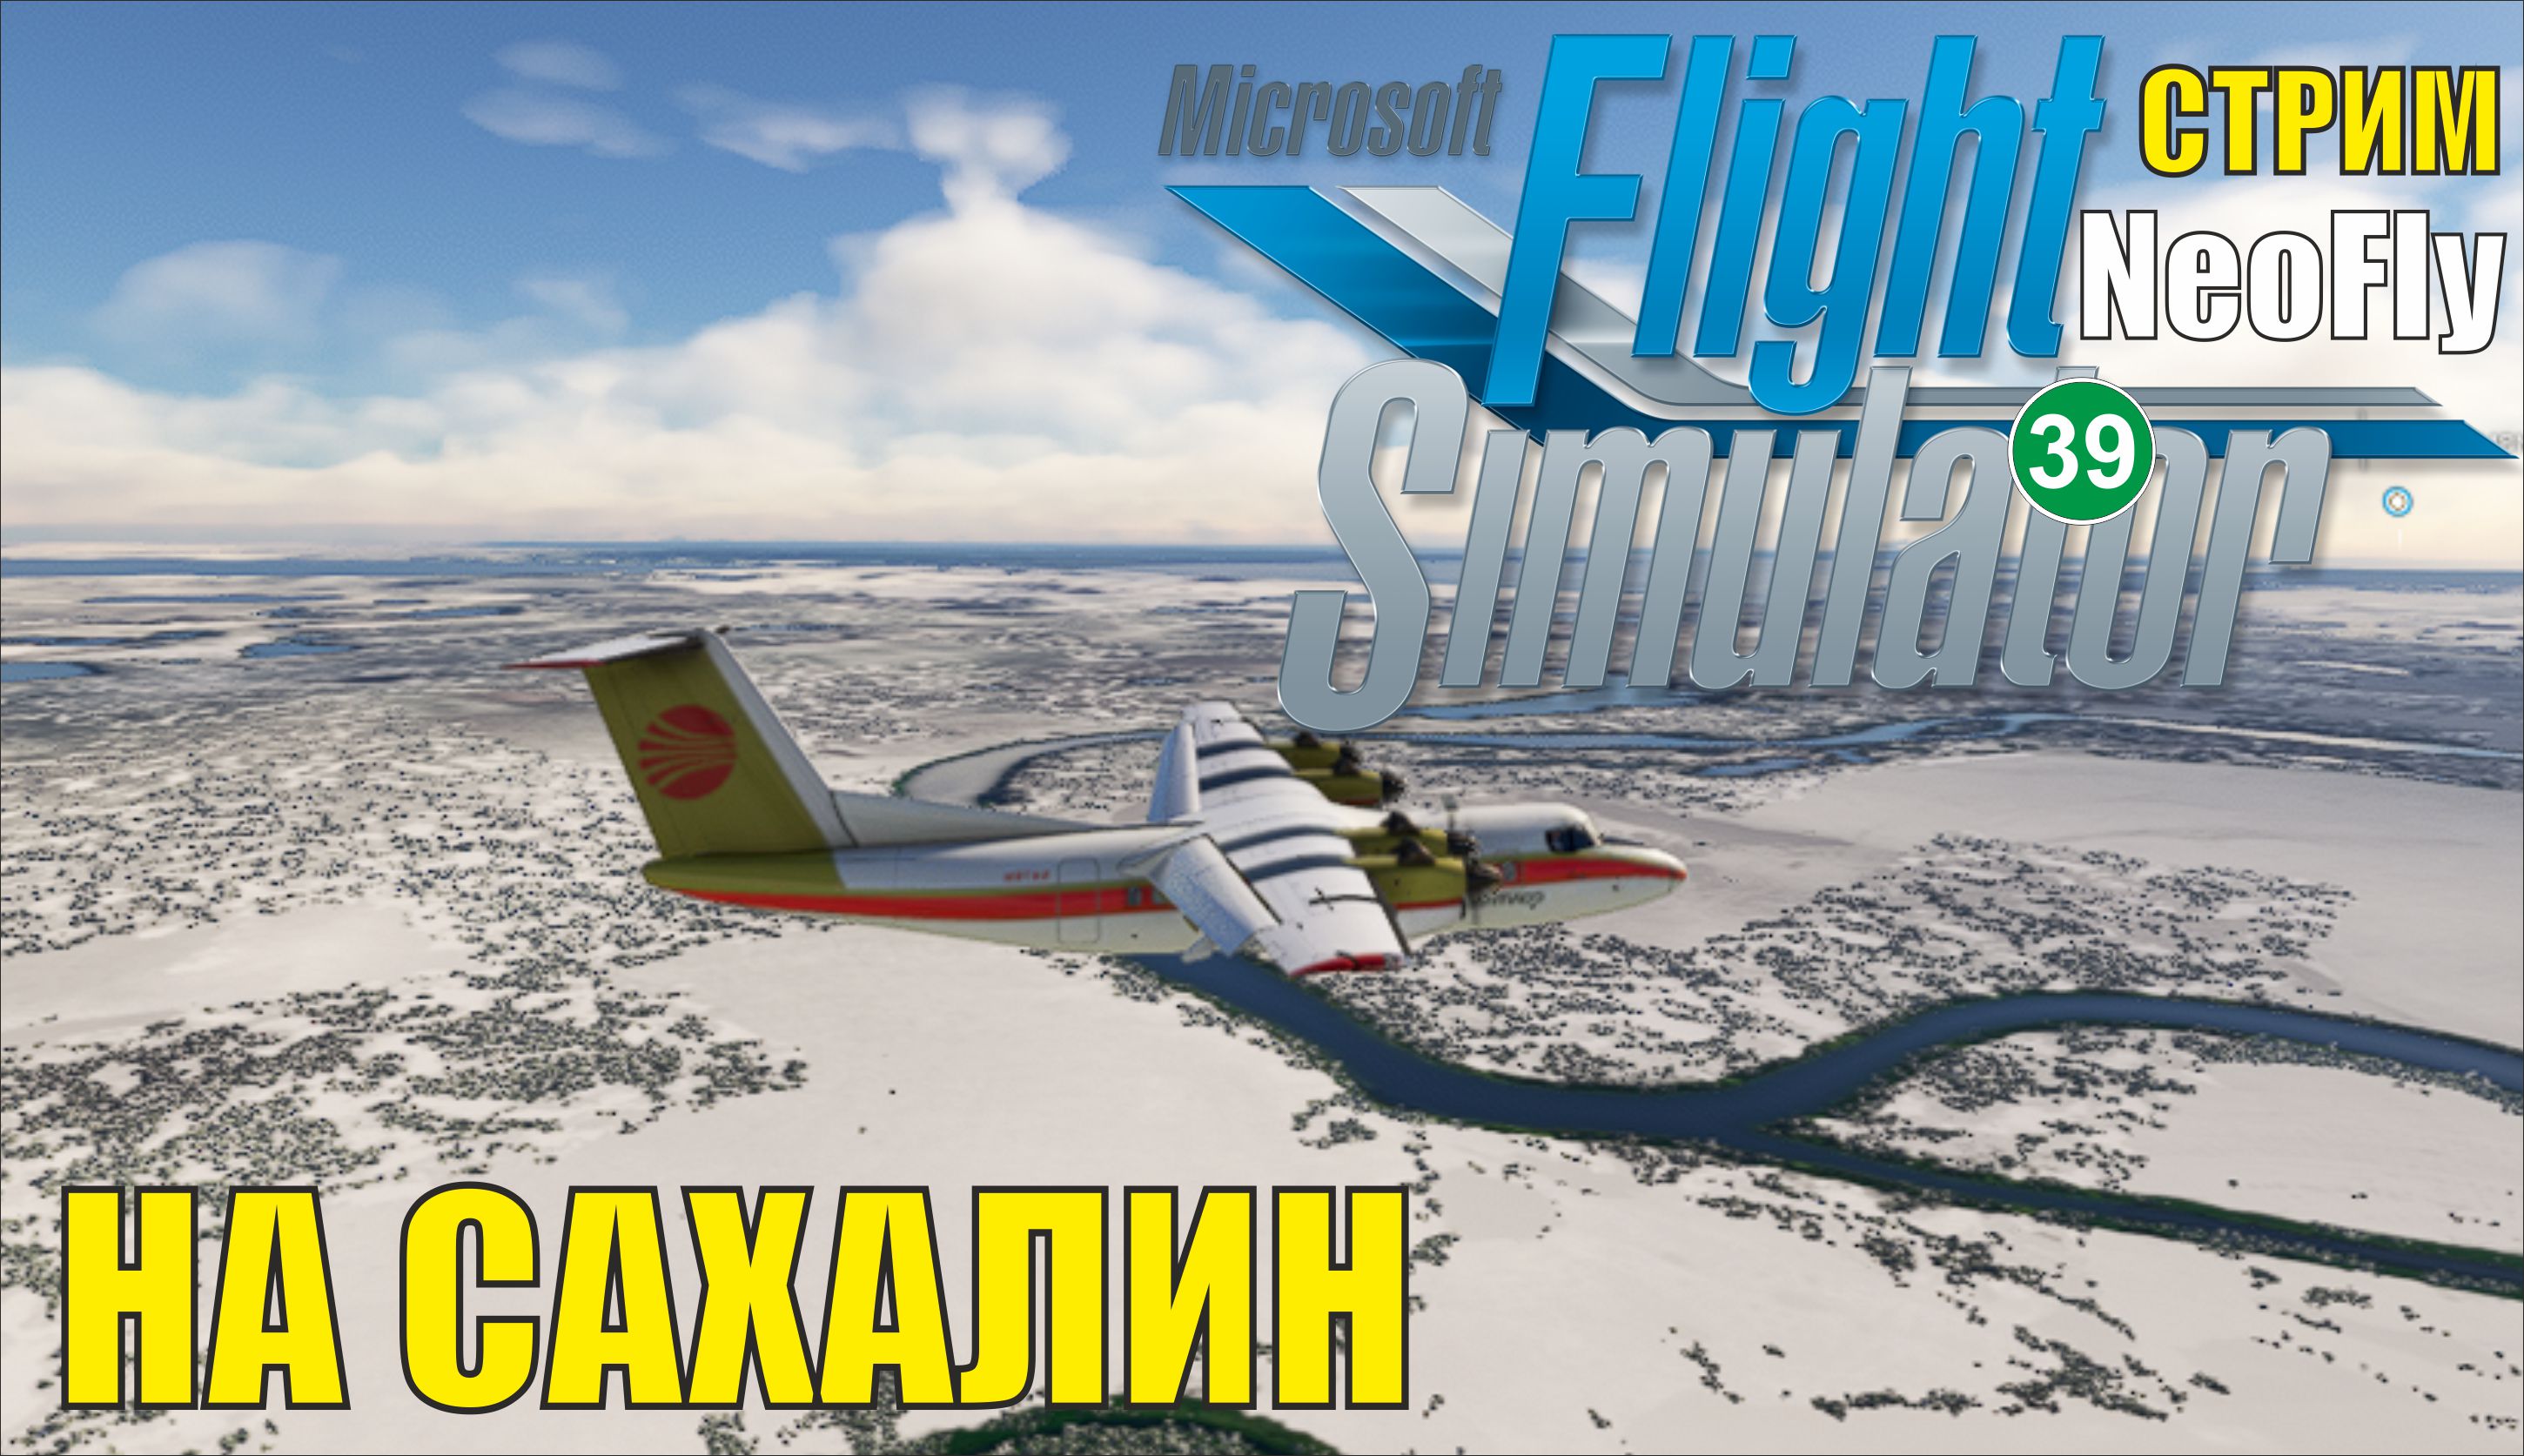 Microsoft Flight Simulator 2020 (NeoFly) - На Сахалин